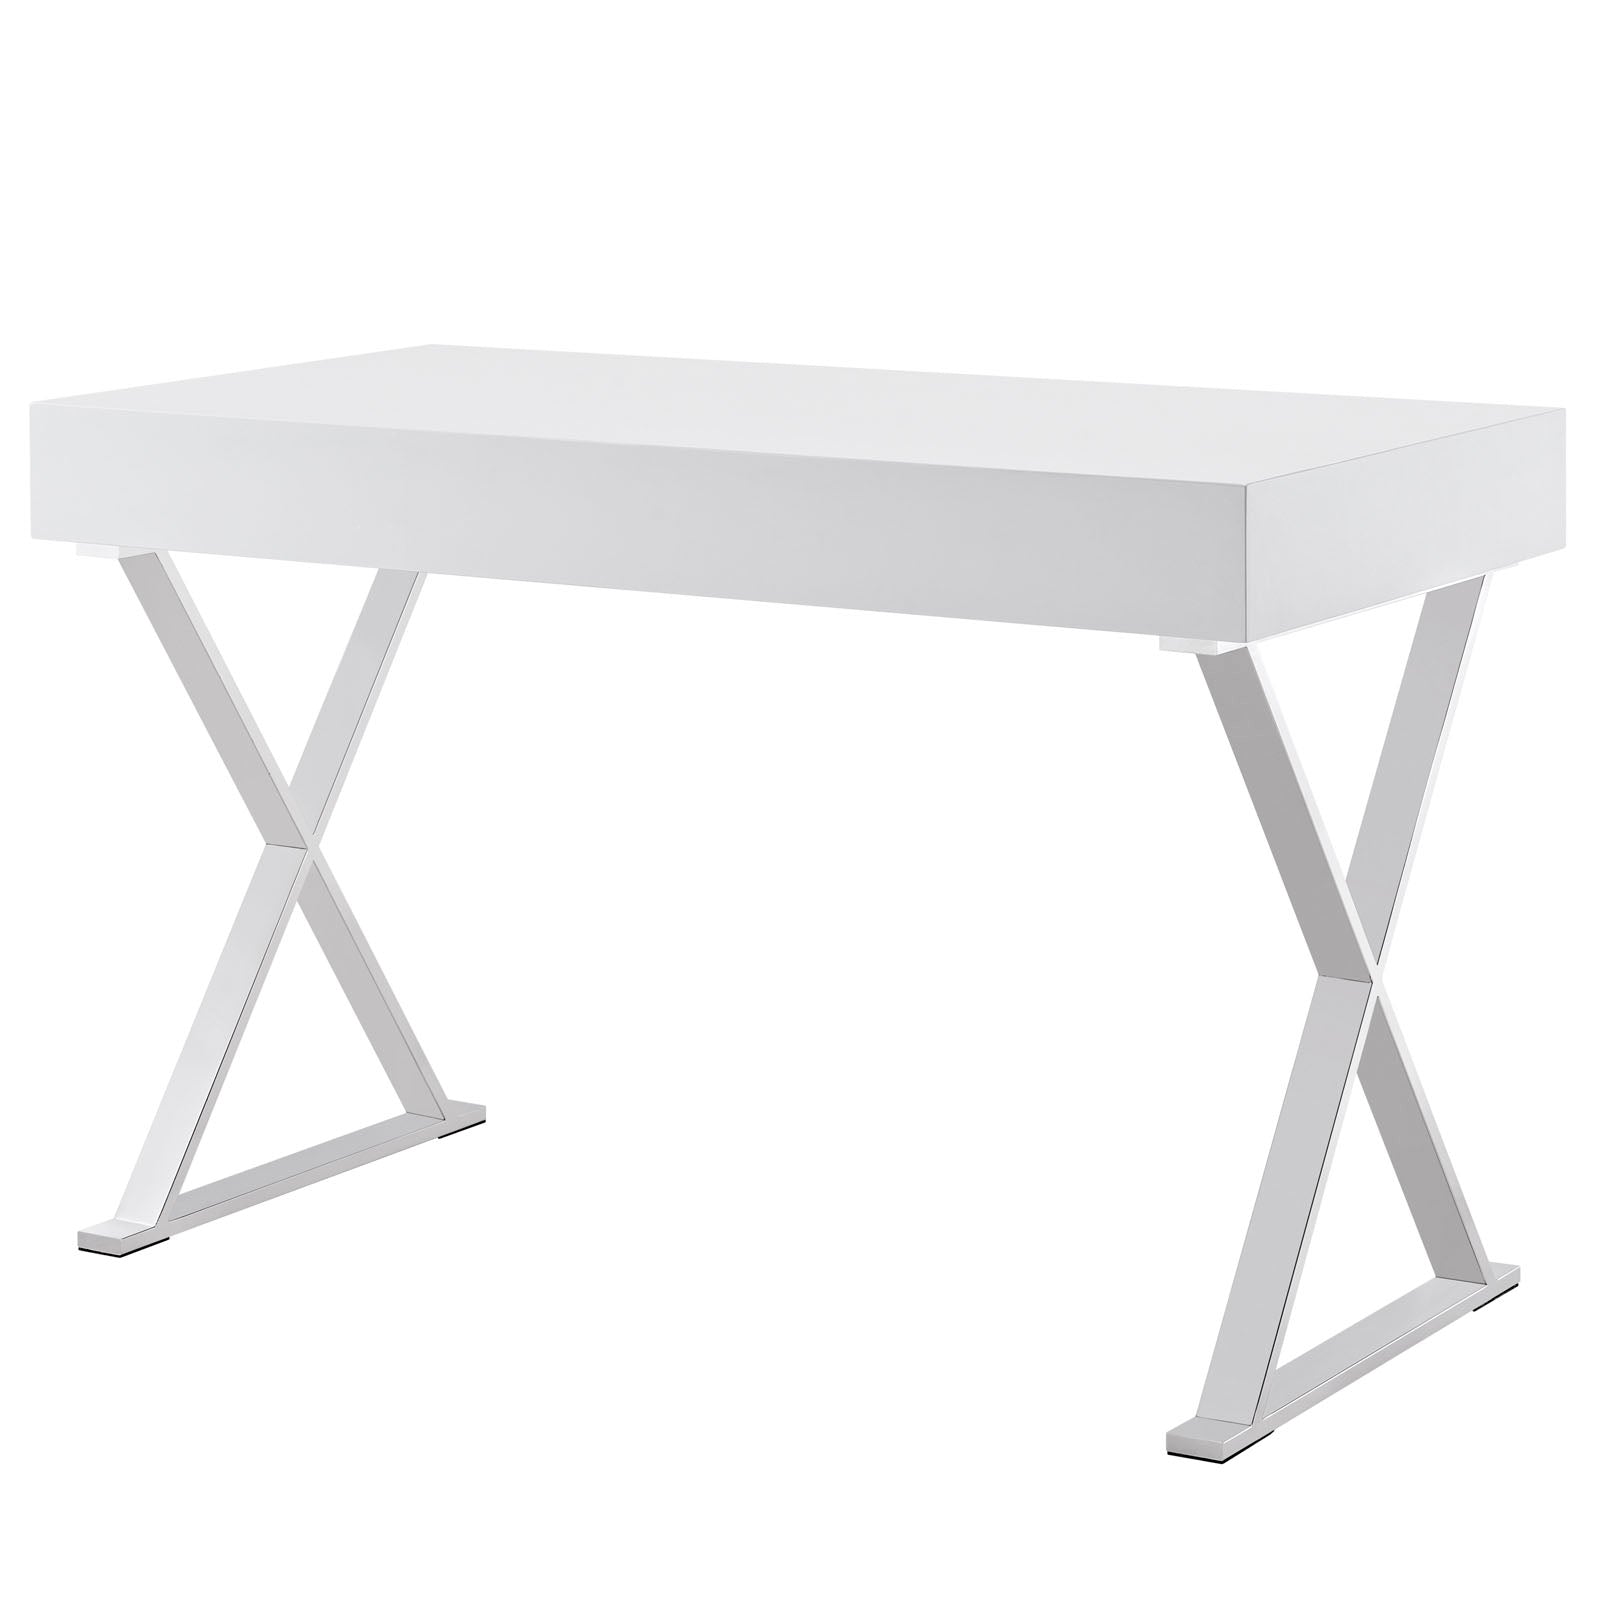 Modway Desks - Sector Office Desk White